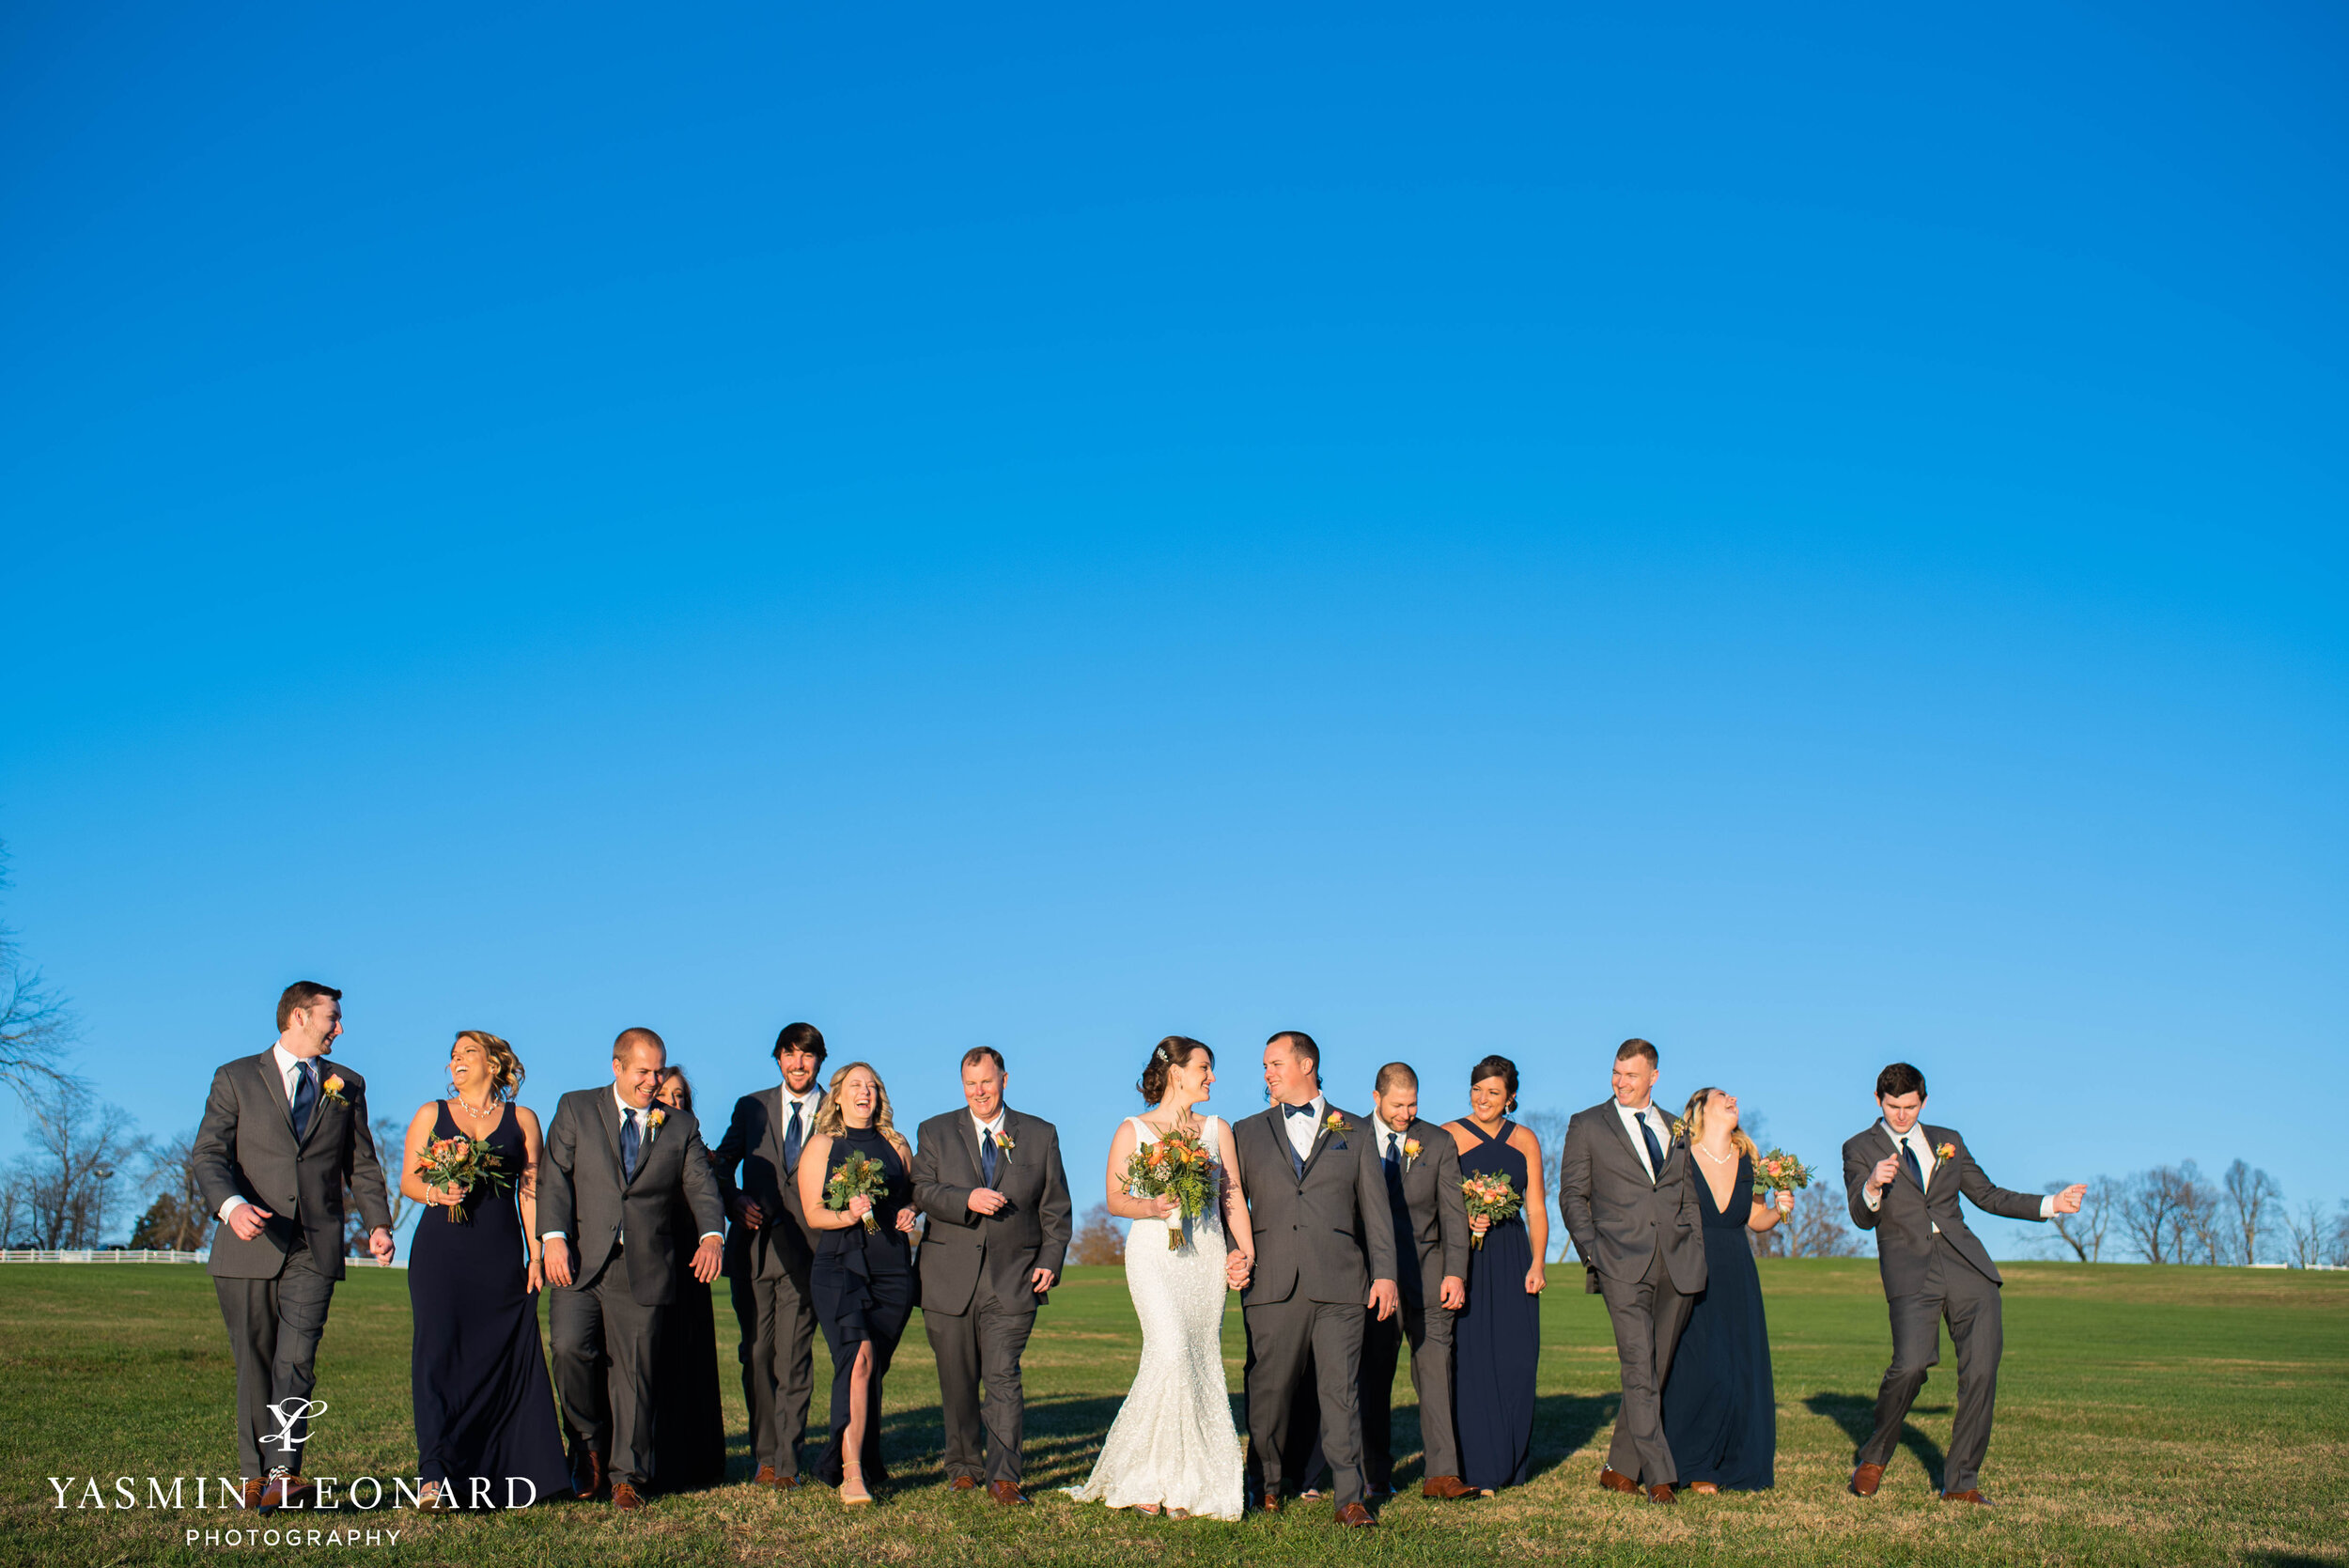 Jared and Katy - Adaumont Farms - High Point Weddings - NC Barn Weddings - Yasmin Leonard Photography-33.jpg